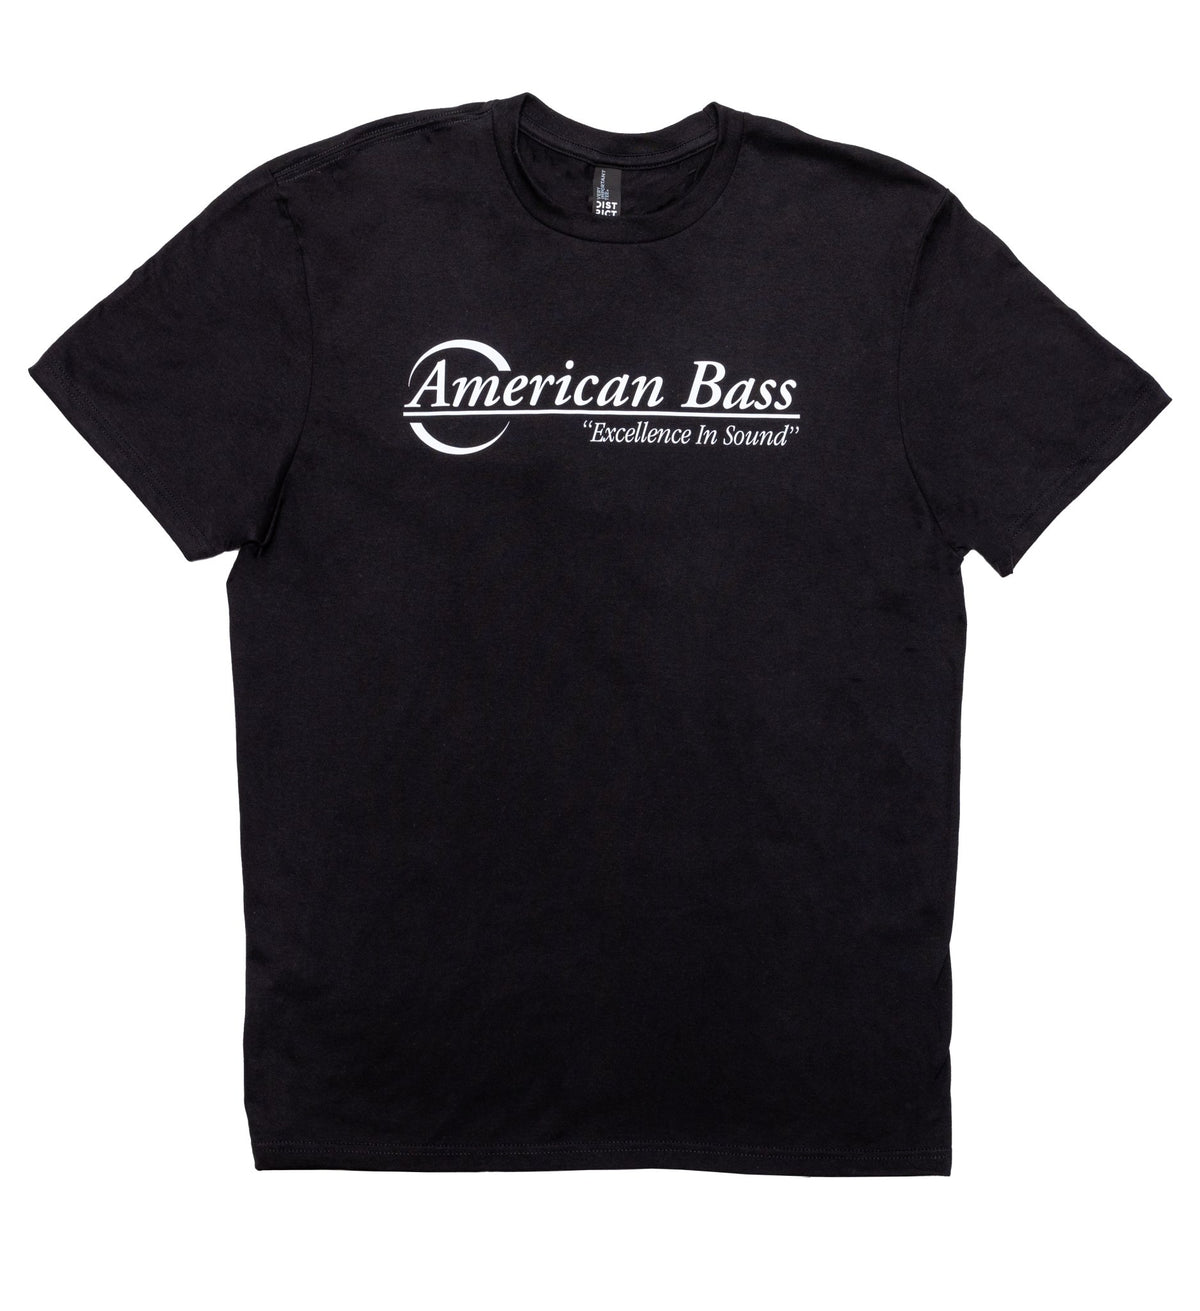 American Bass T-Shirt (Black) - American Bass Audio